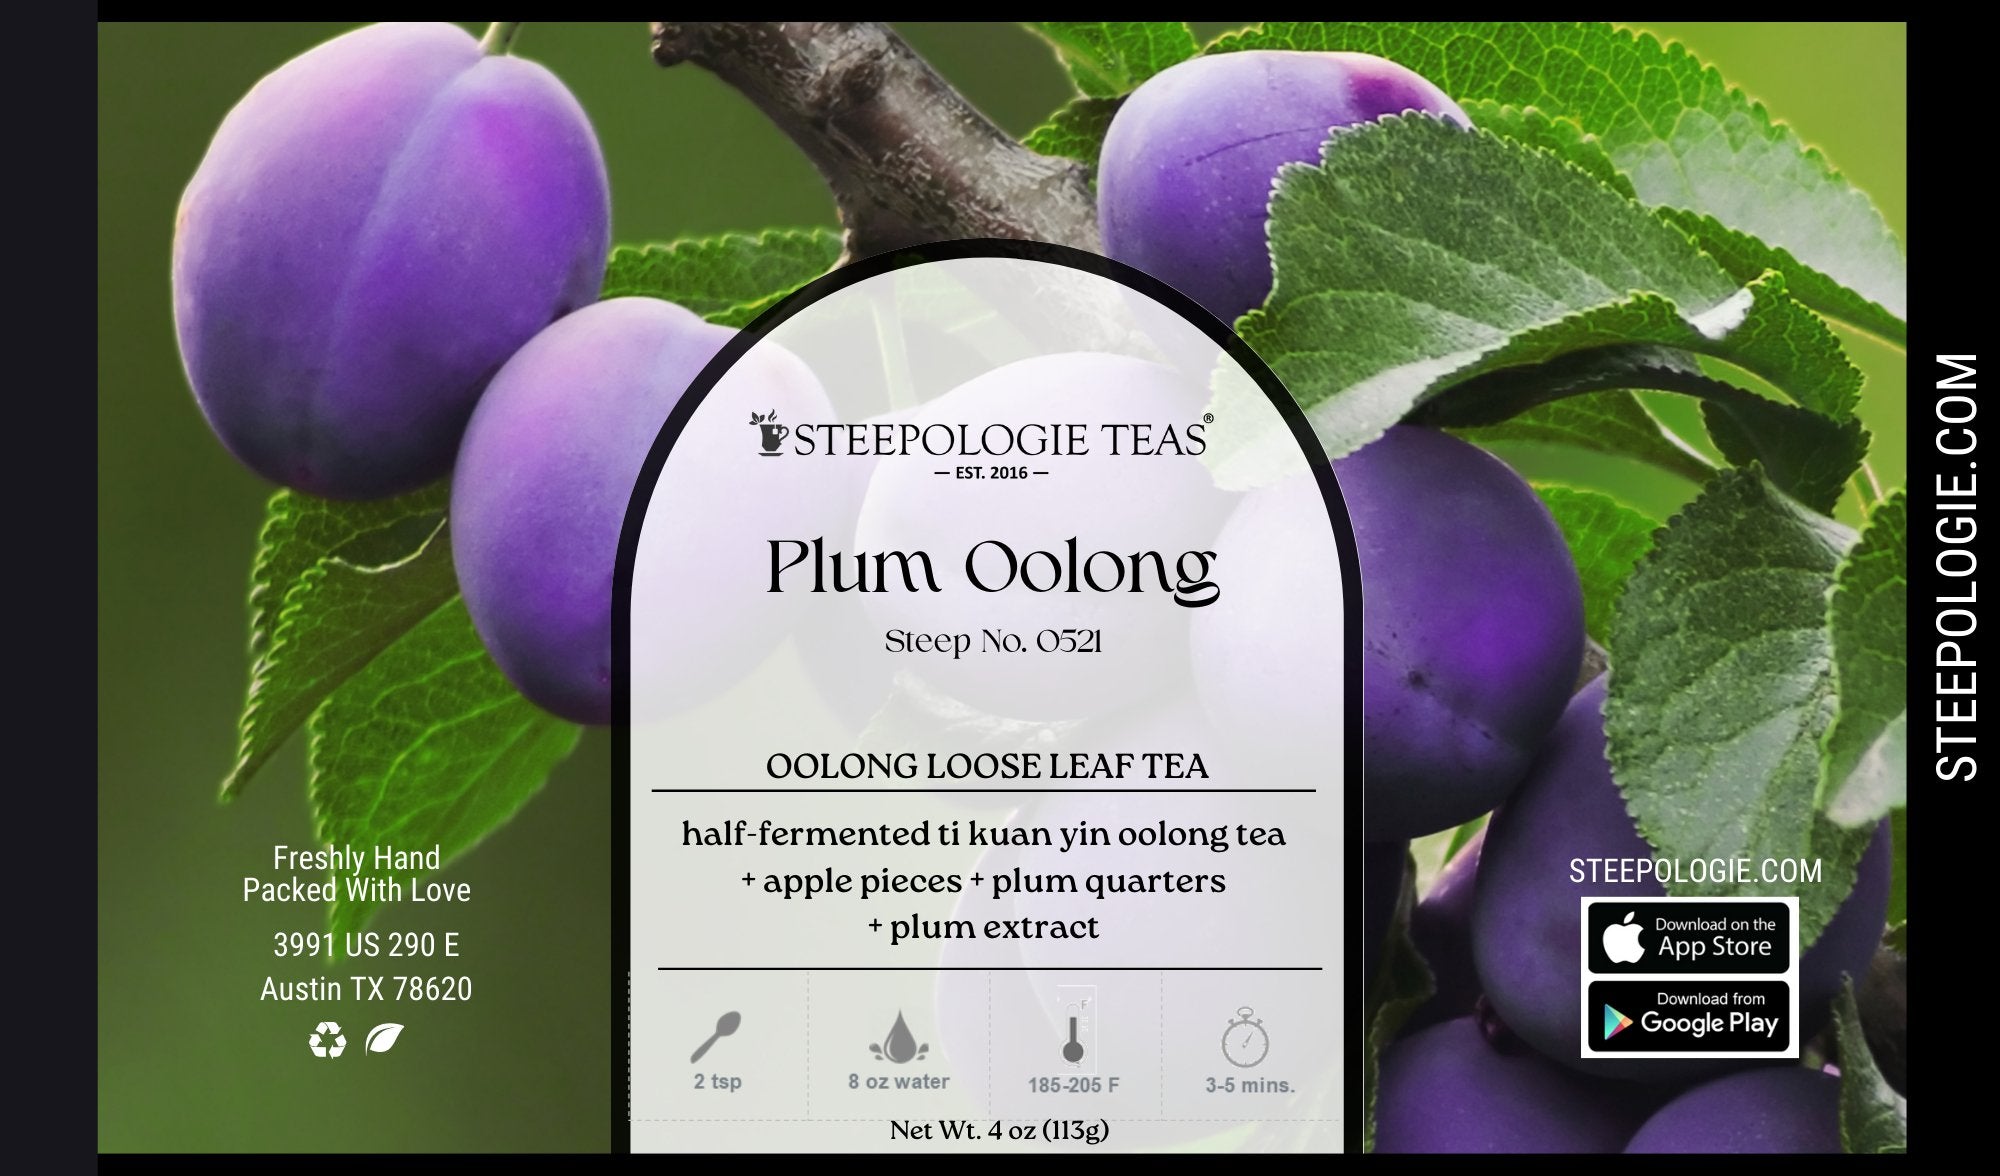 Plum Oolong Tea (Steep No. O521) - Steepologie